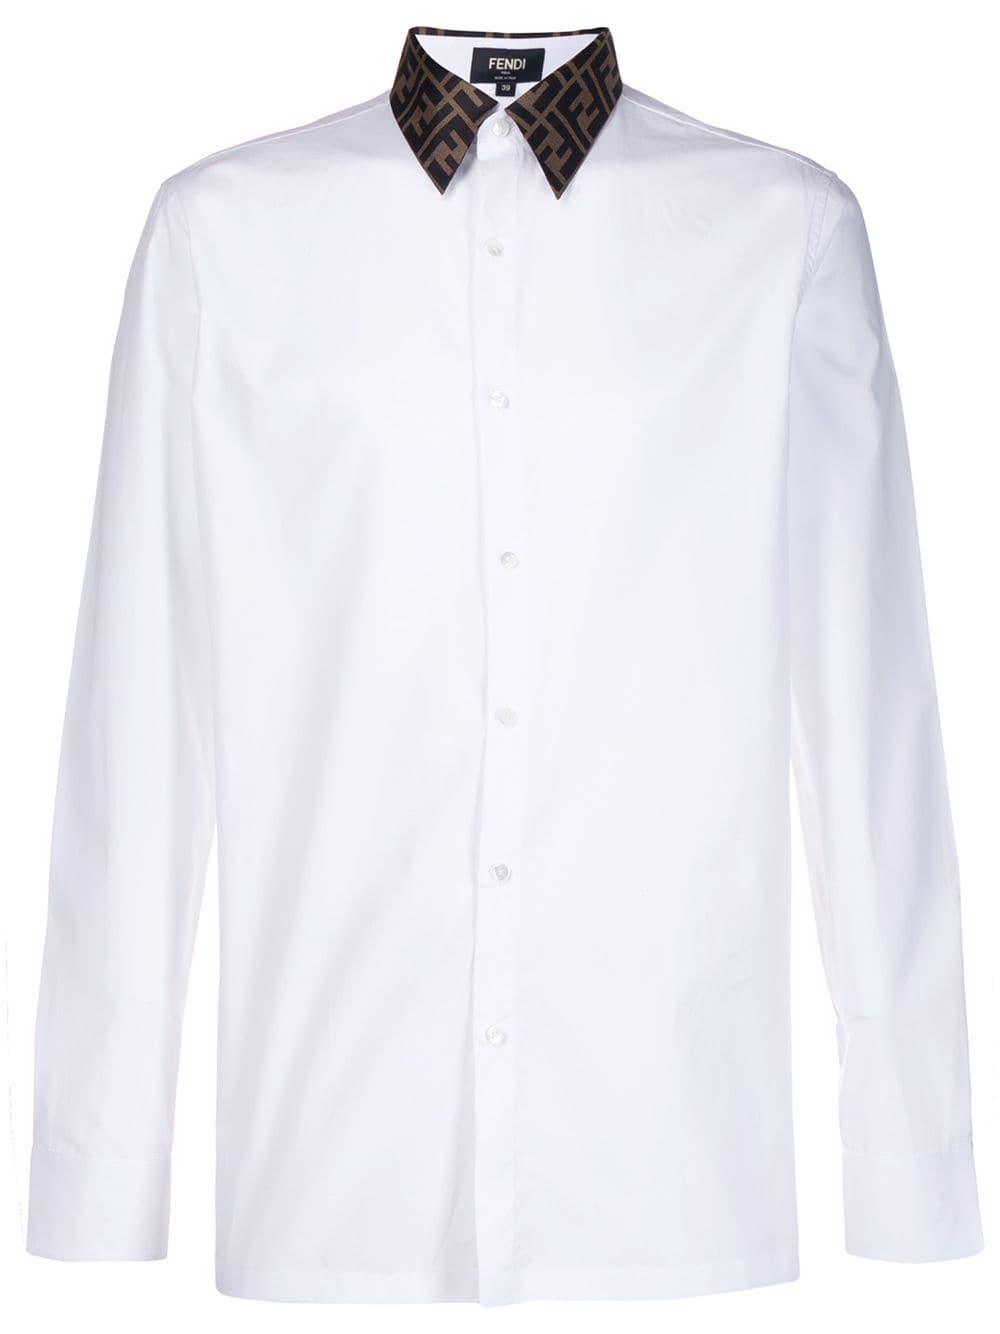 Fendi Silk Logo Collar Tailored Shirt in White for Men - Save 27% - Lyst